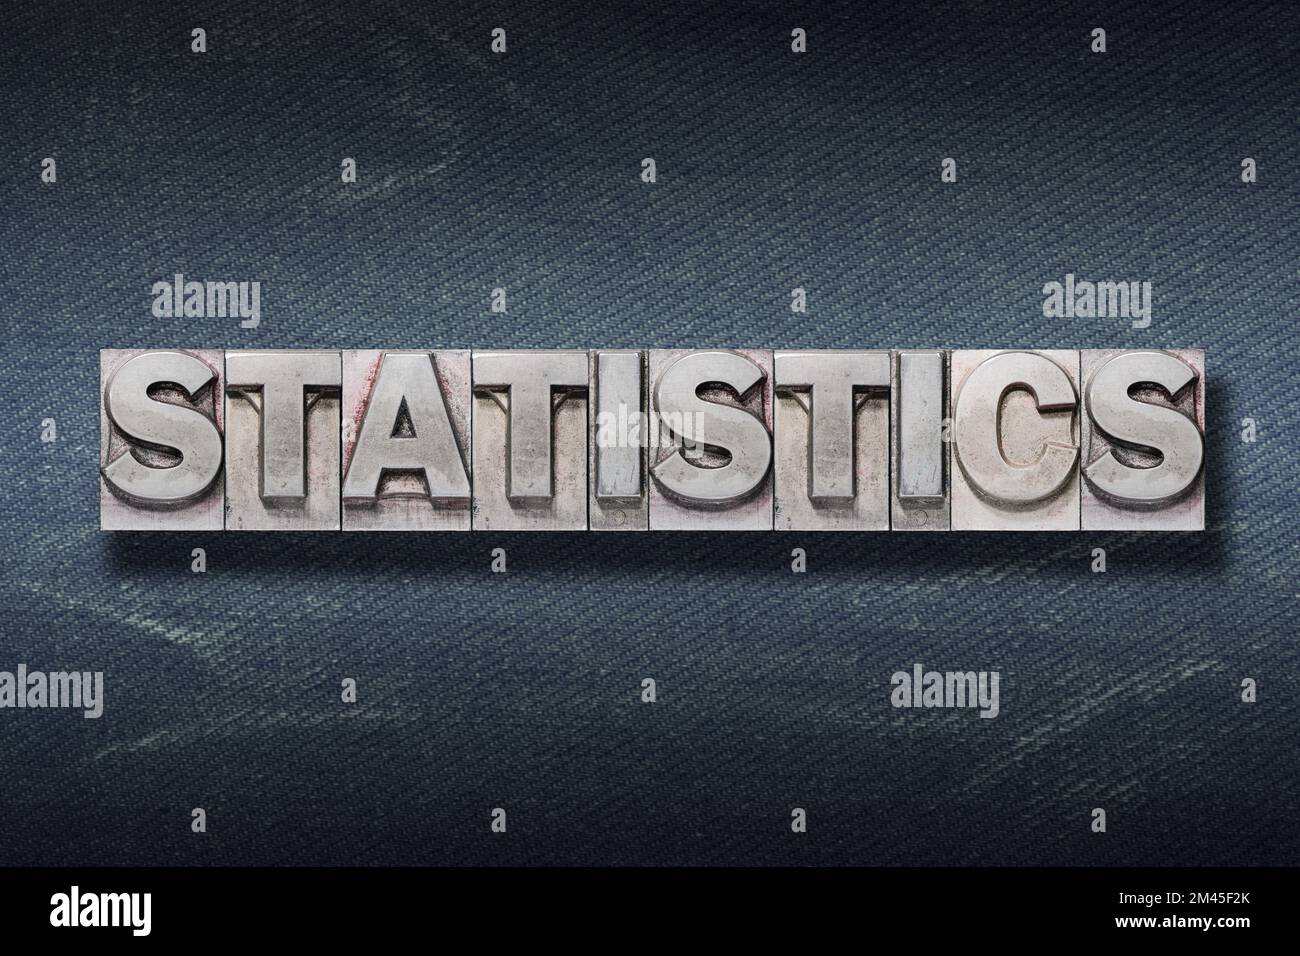 statistics word made from metallic letterpress on dark jeans background Stock Photo